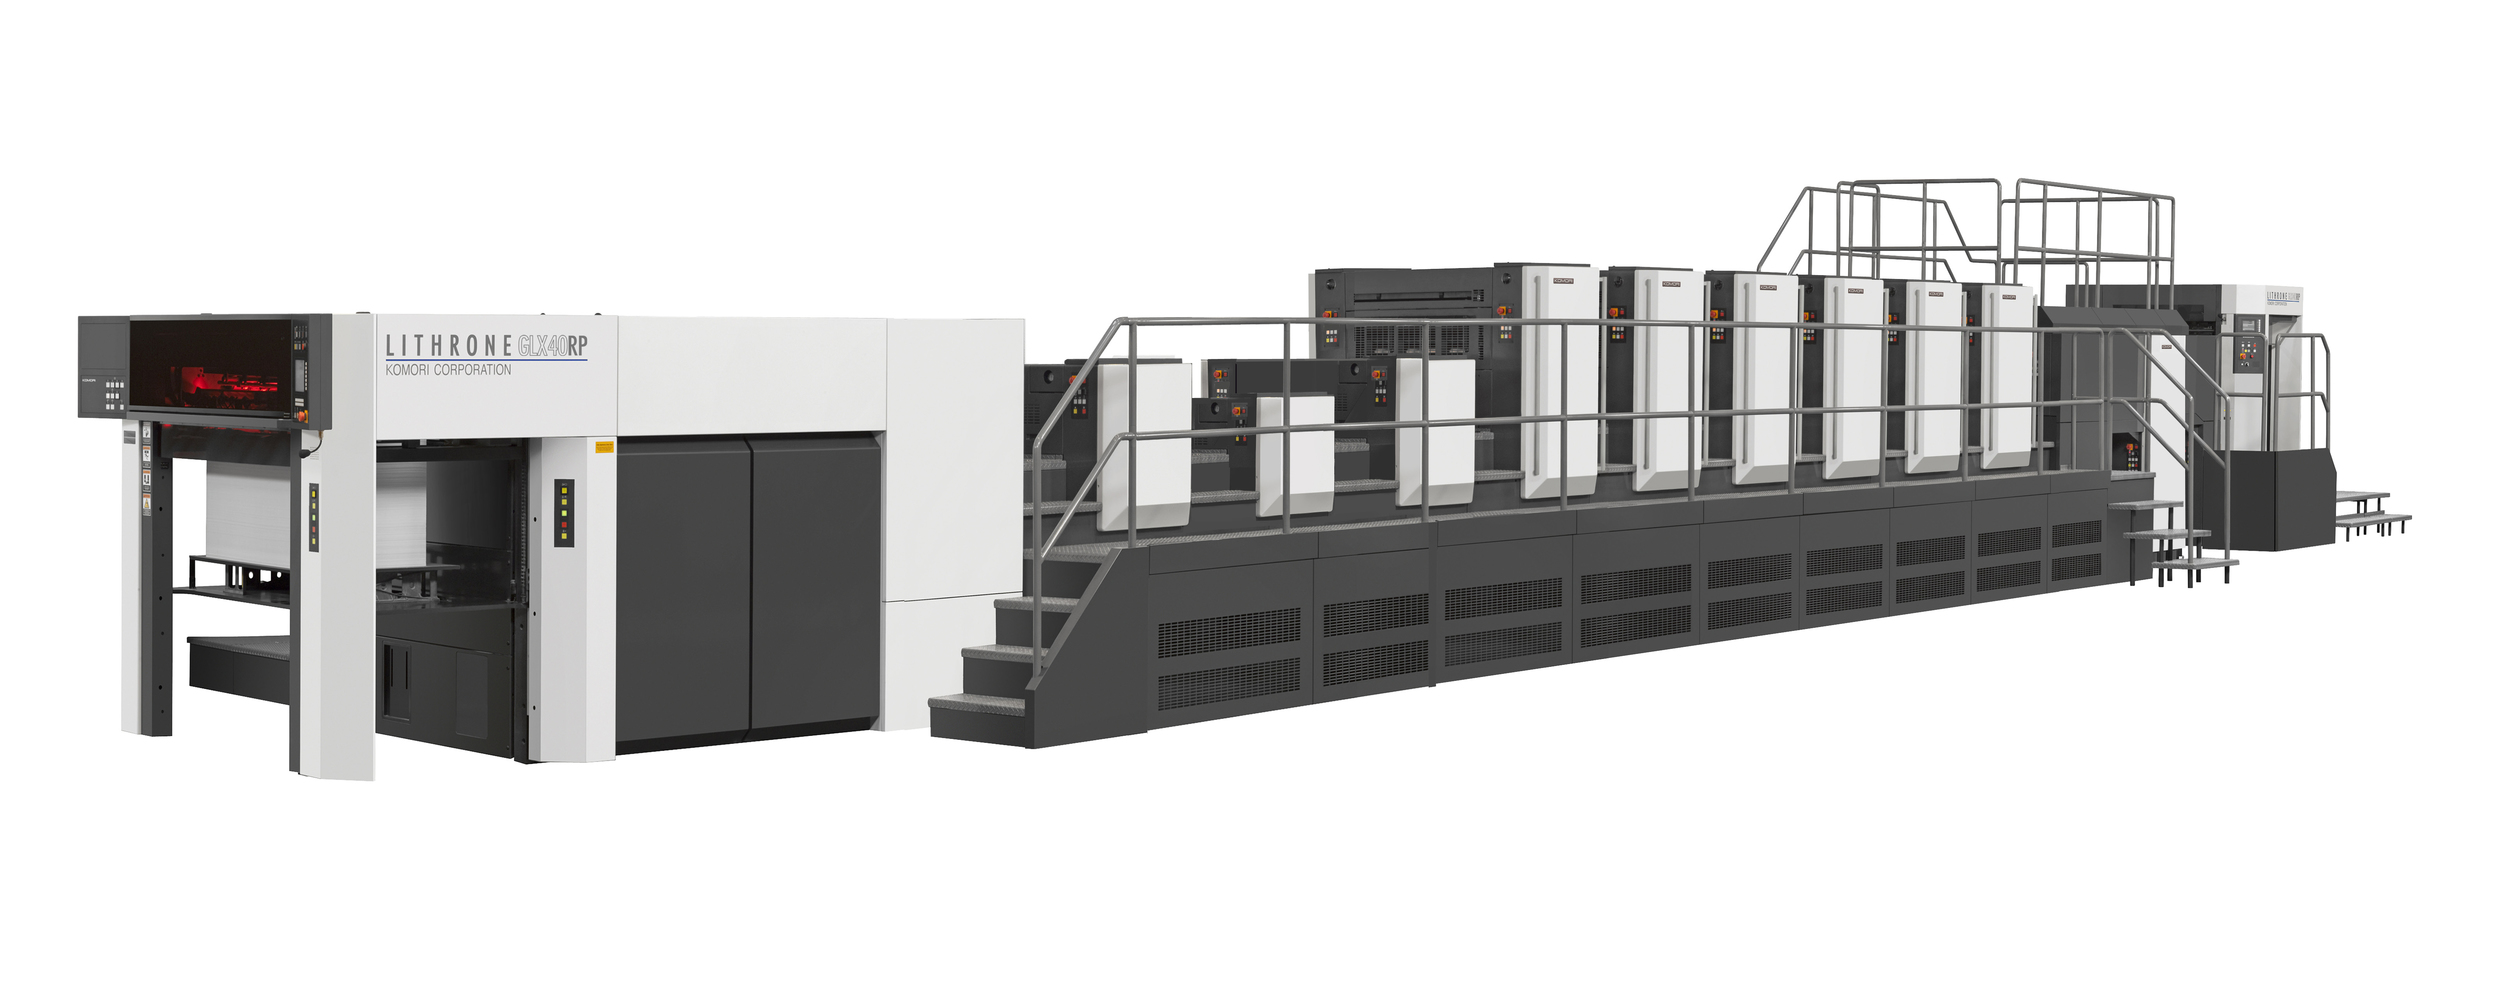 Printing-Press-Chesapeake GLX40RP.jpg